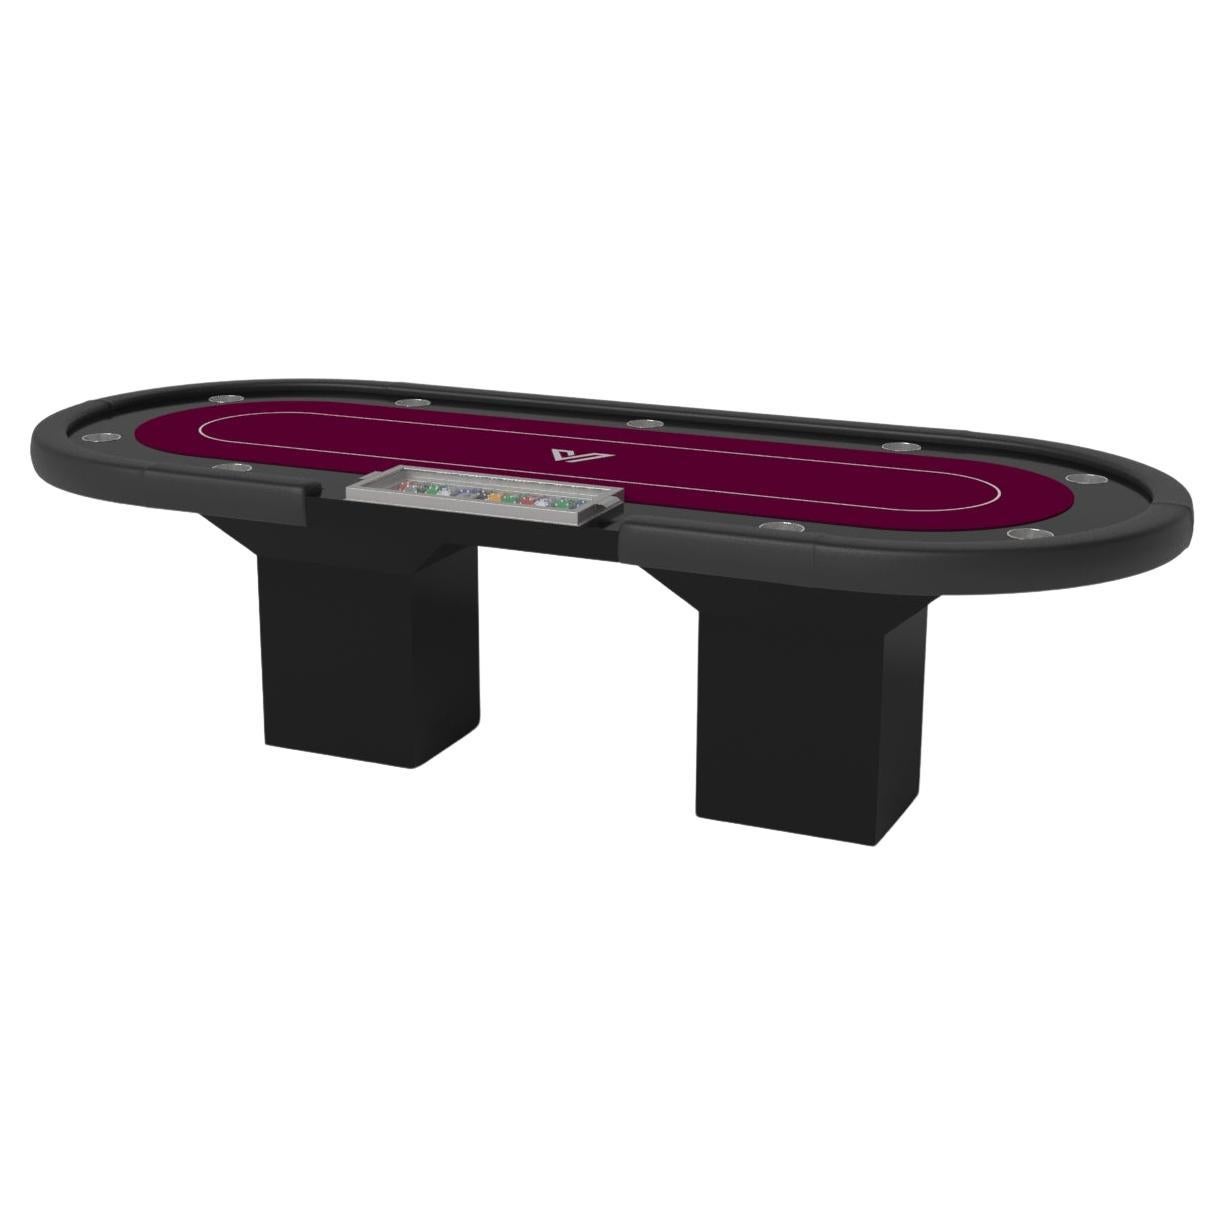 Elevate Customs Trestle Poker Tables / Solid Pantone Black Color in 8'8" - USA